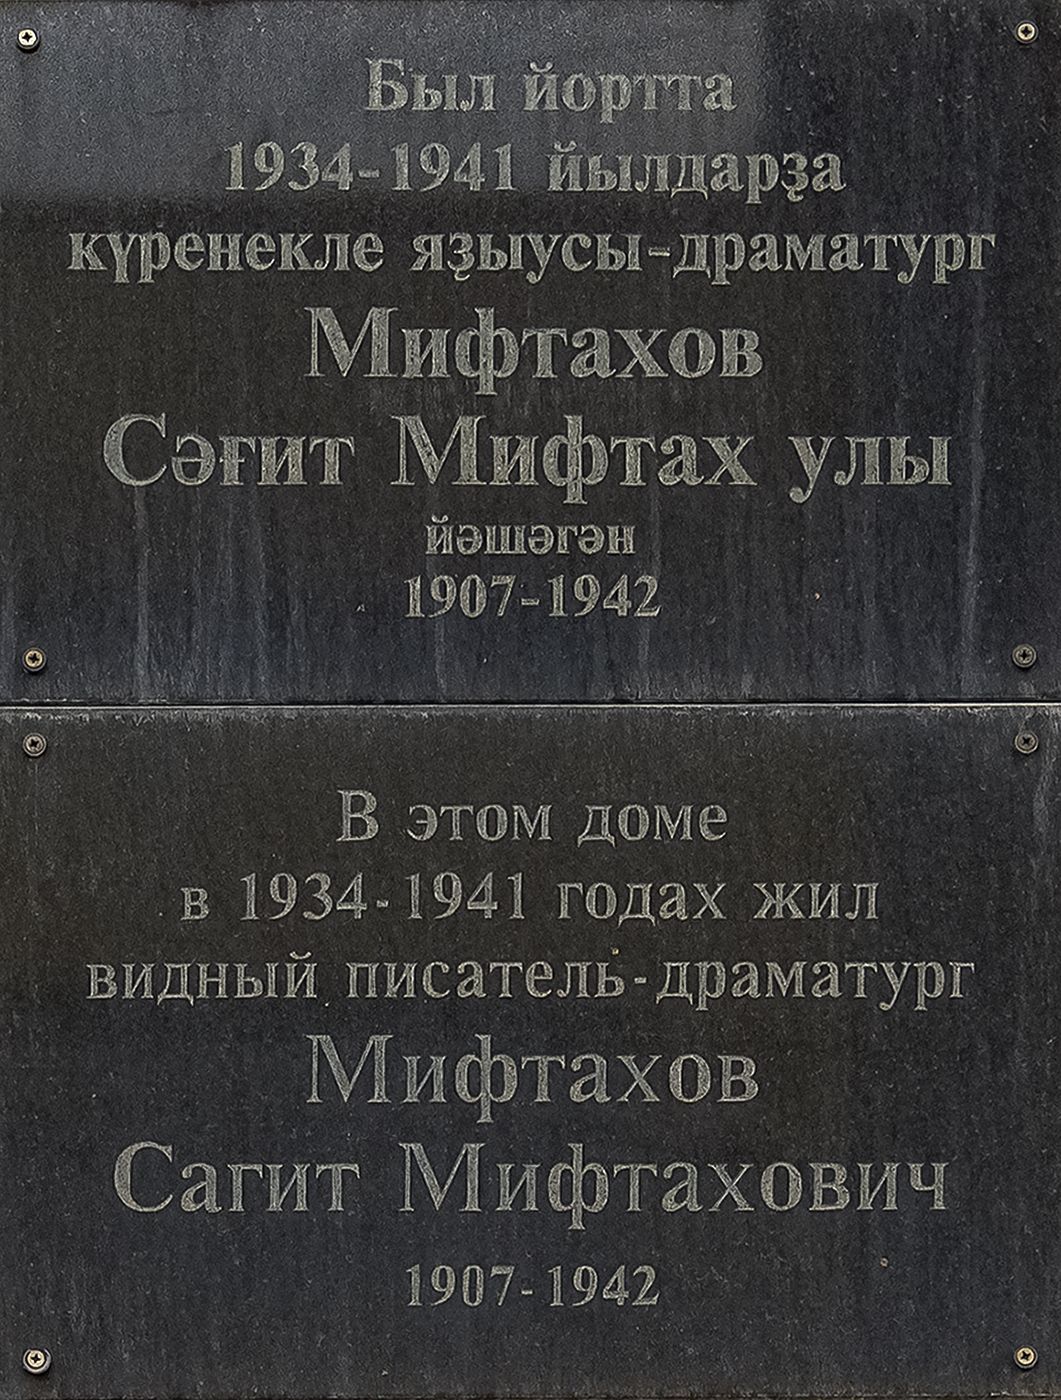 Ufa, Улица Карла Маркса, 17/19. Ufa — Memorial plaques